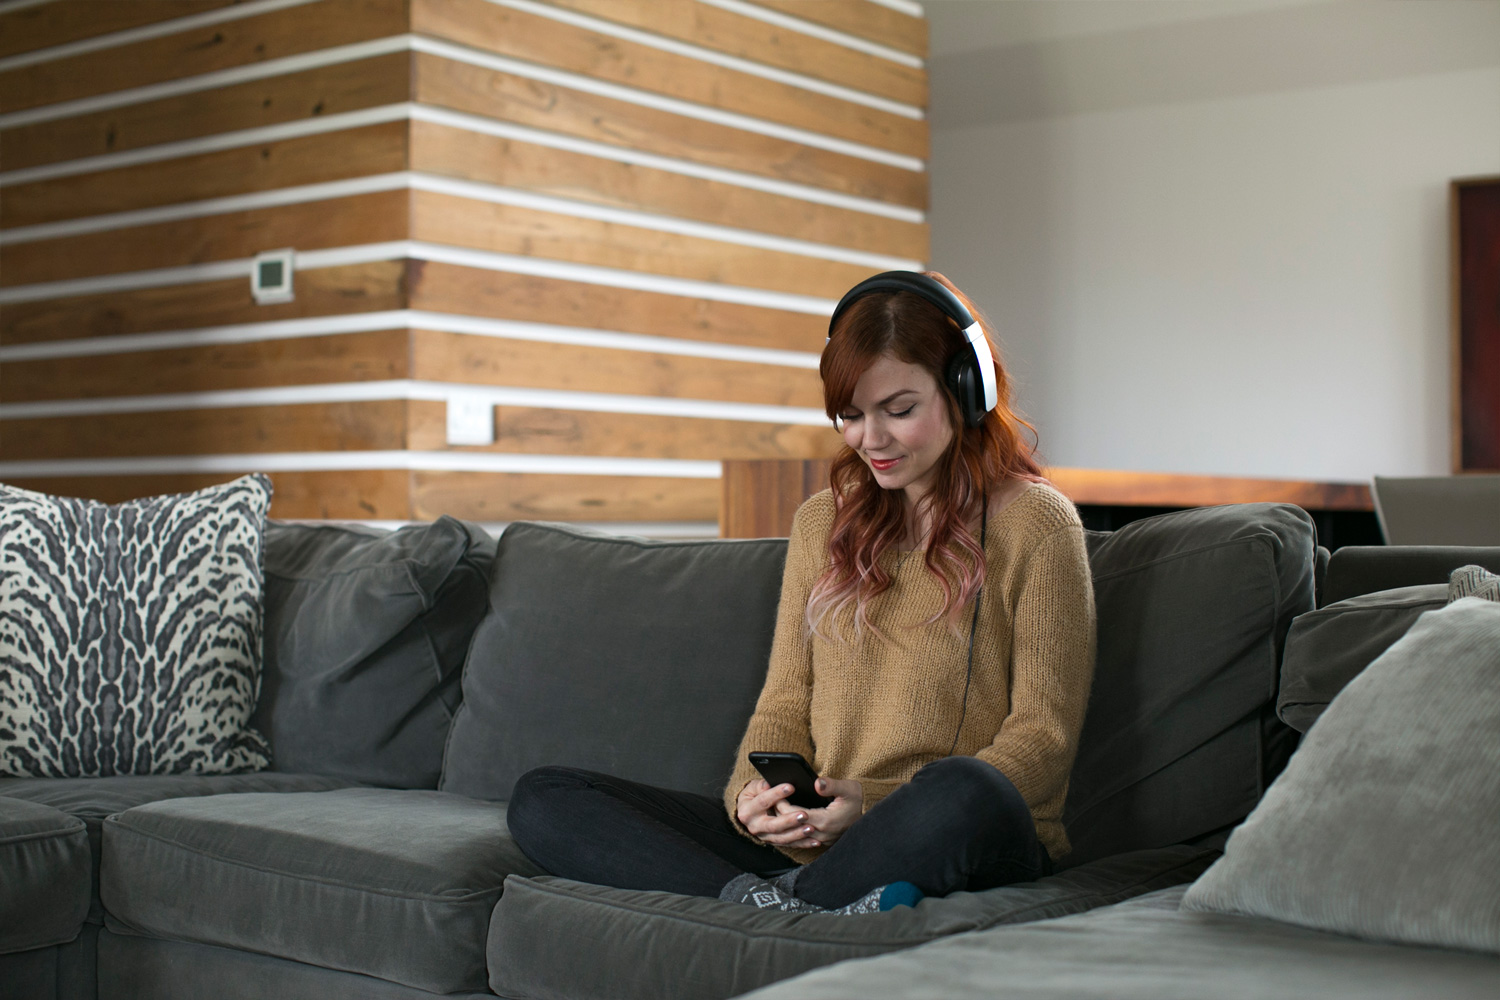 blipcast kickstarter use wired headphones wirelessly lifestyle device wireless sound 6